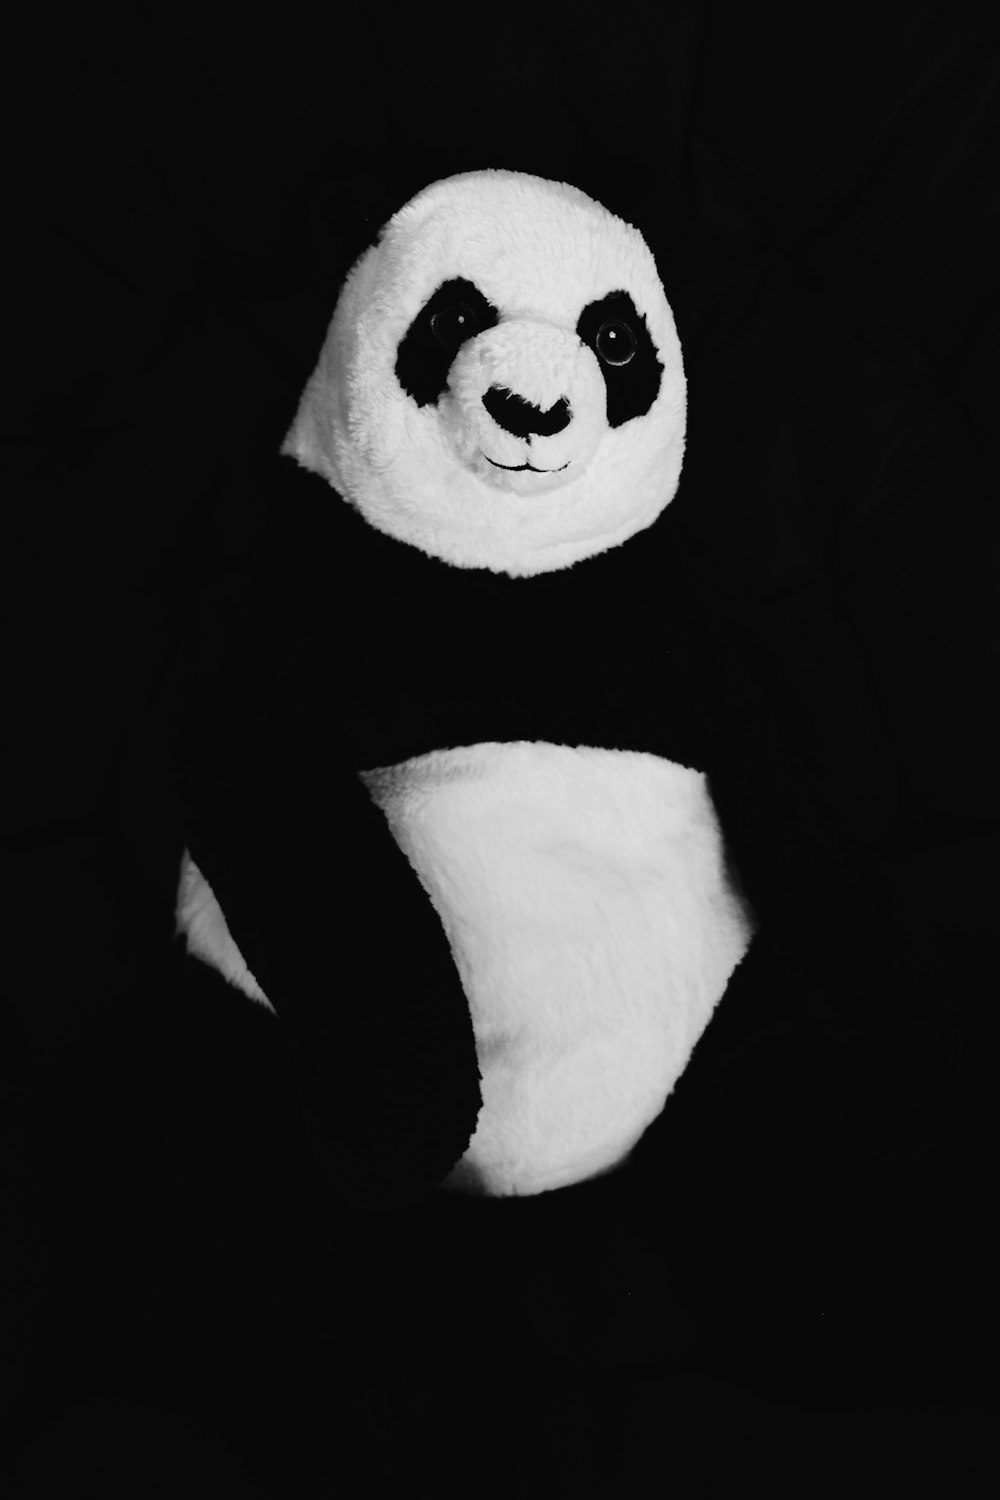 white and black panda plush toy